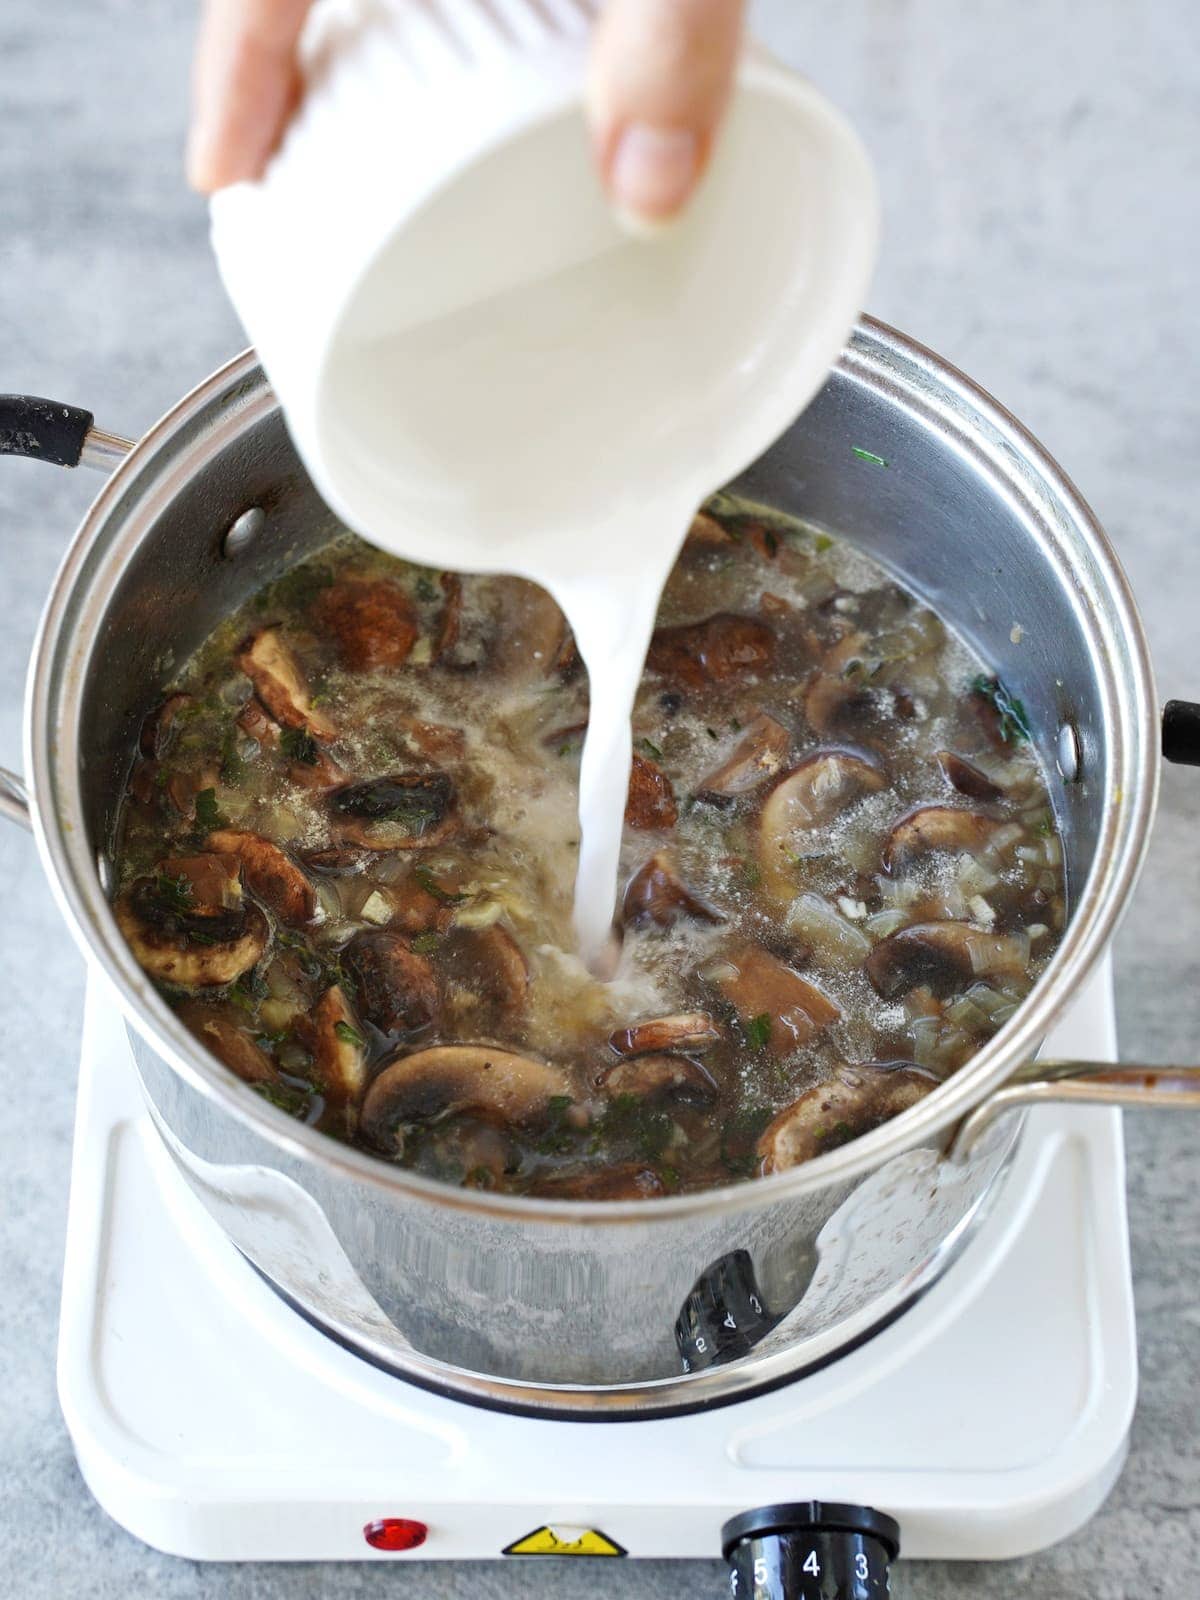 pouring dairy-free cream into mushroom soup